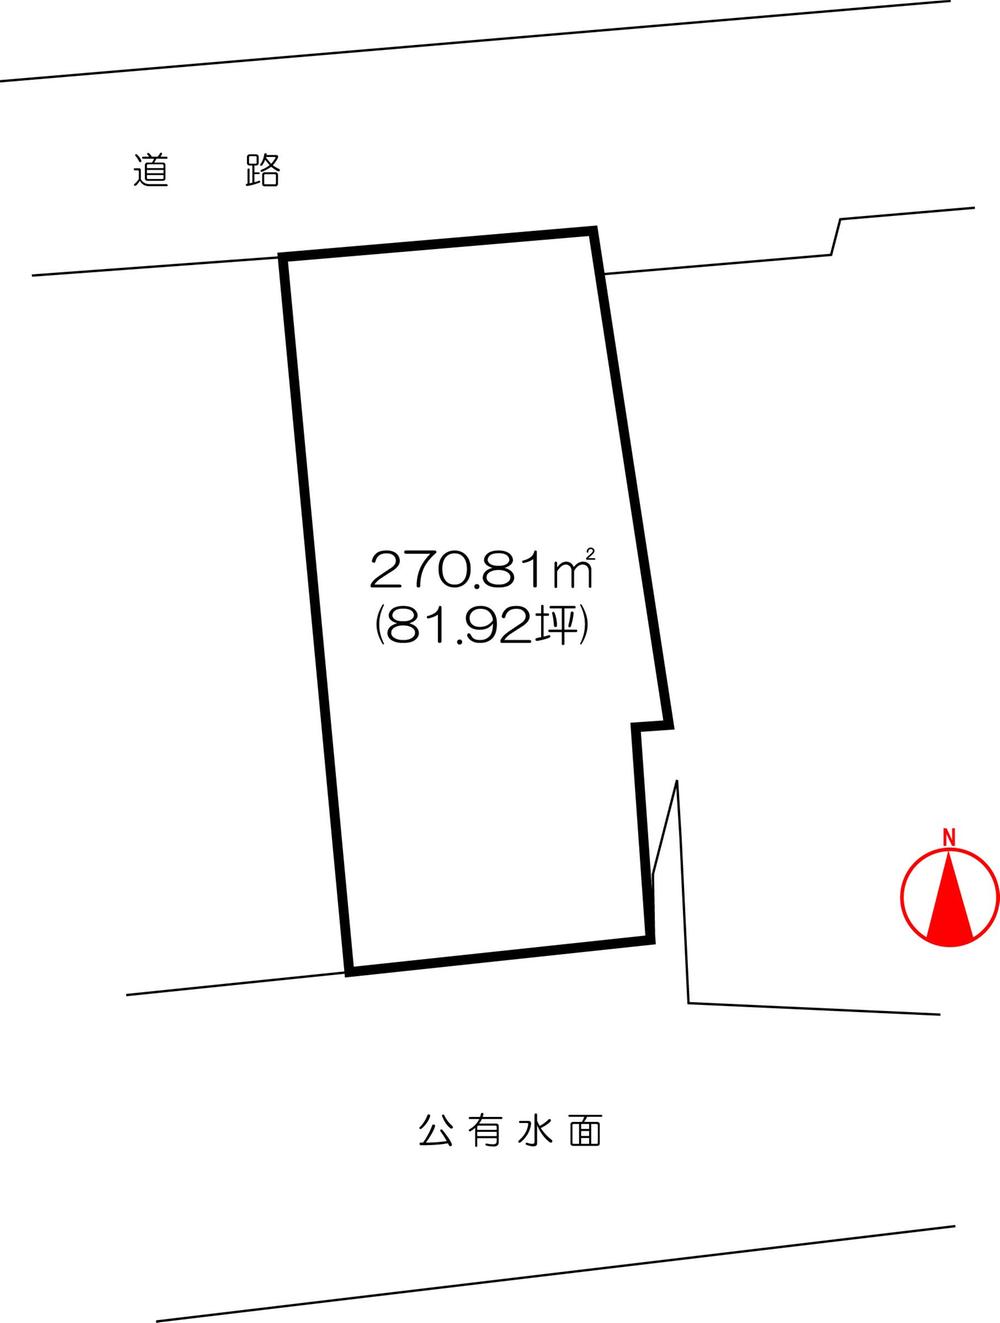 Compartment figure. Land price 5.88 million yen, Land area 270.81 sq m